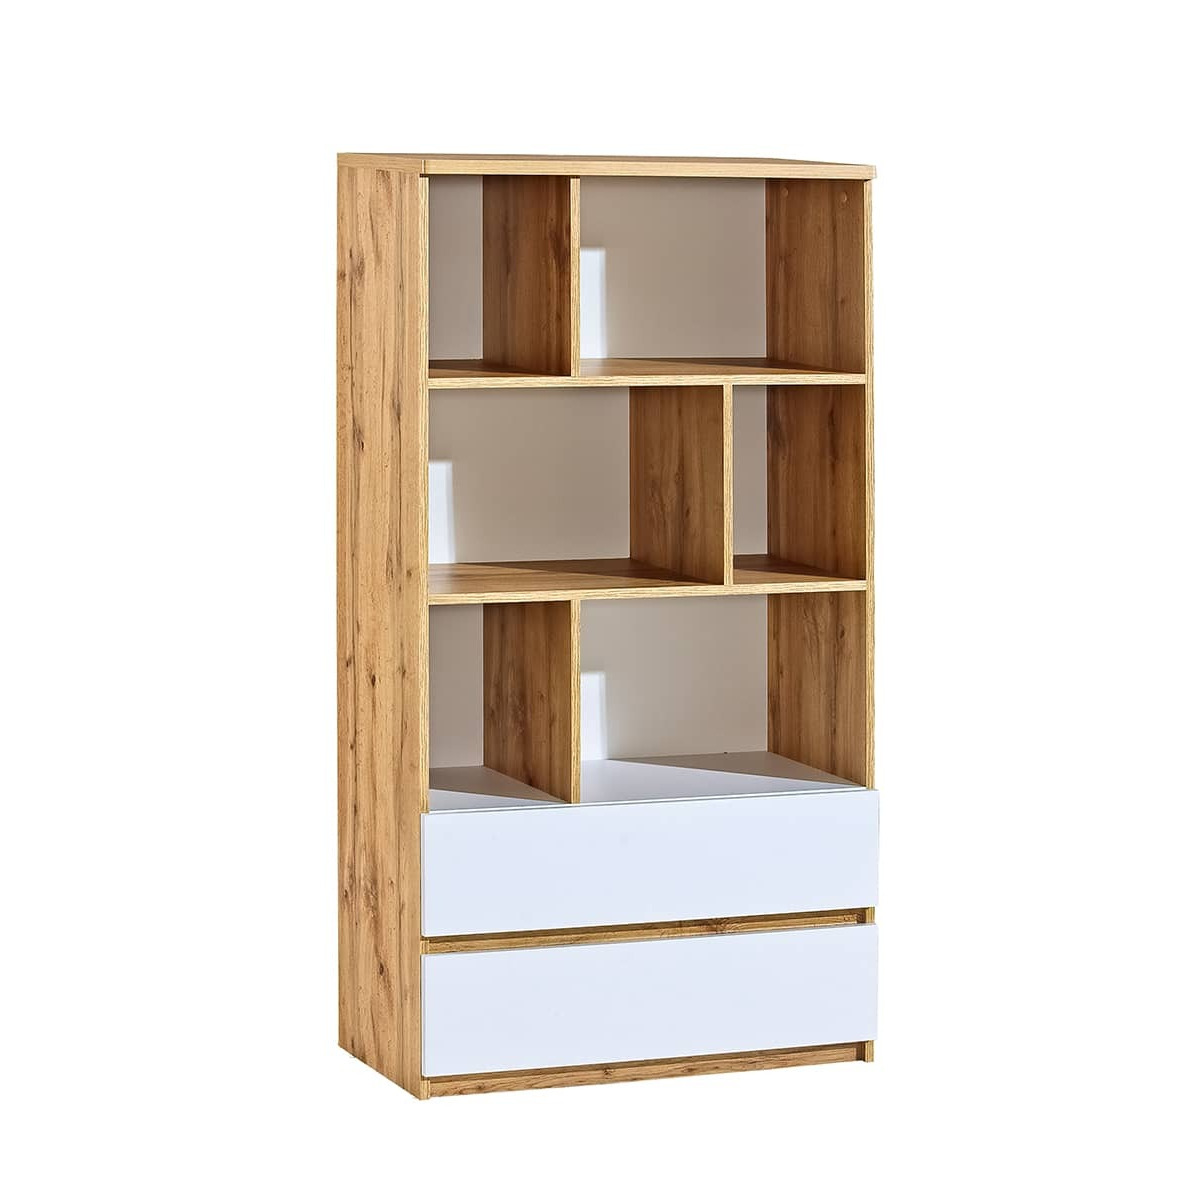 Arca AR4 Bookcase 80cm - Oak Wotan 80cm - image 1